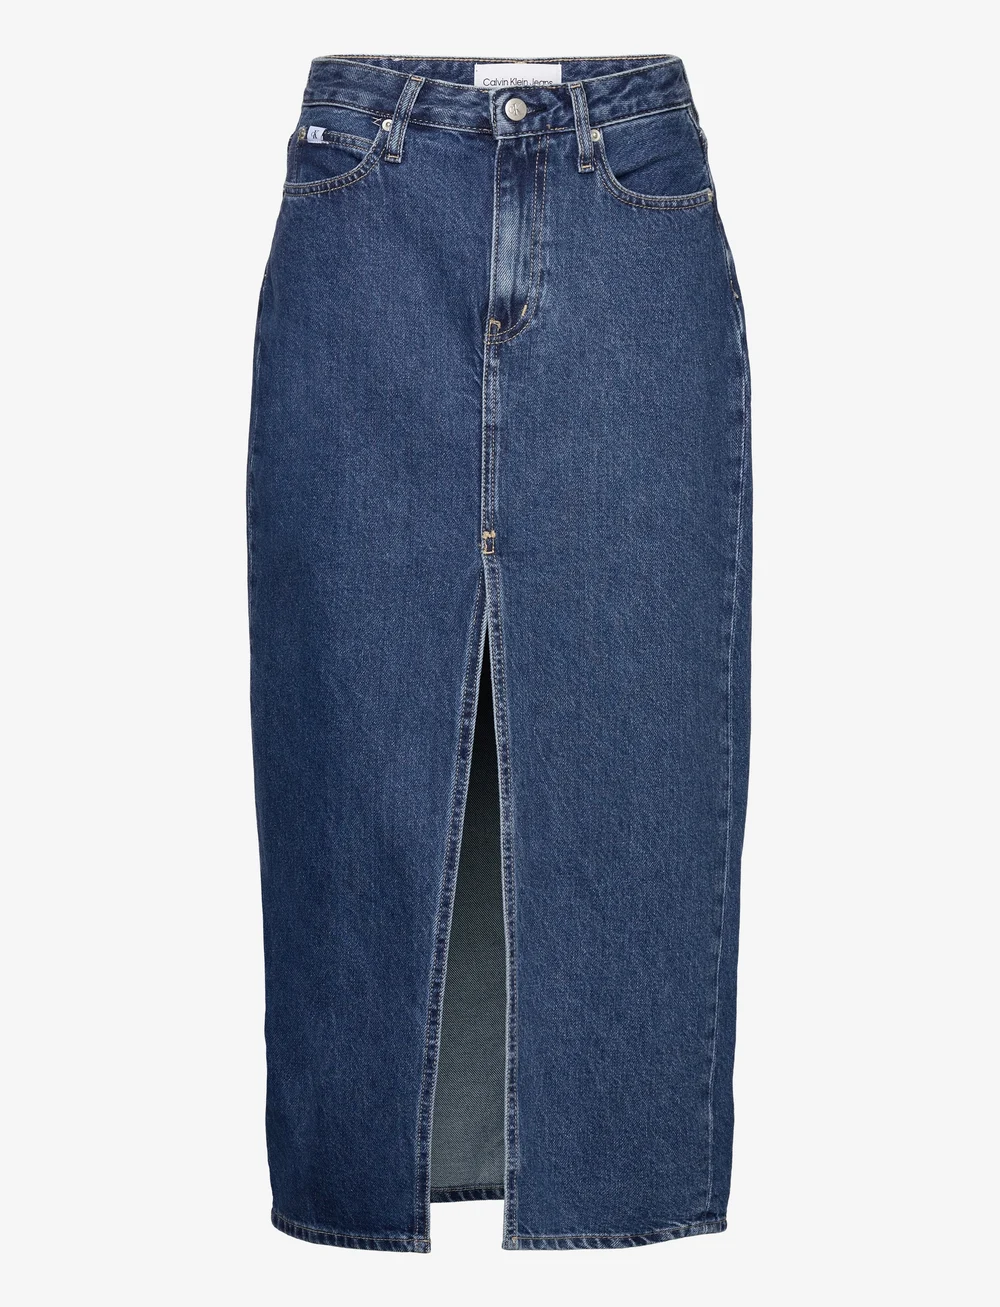 Calvin Klein Jeans Front Split Maxi Denim Skirt - Maxi skirts